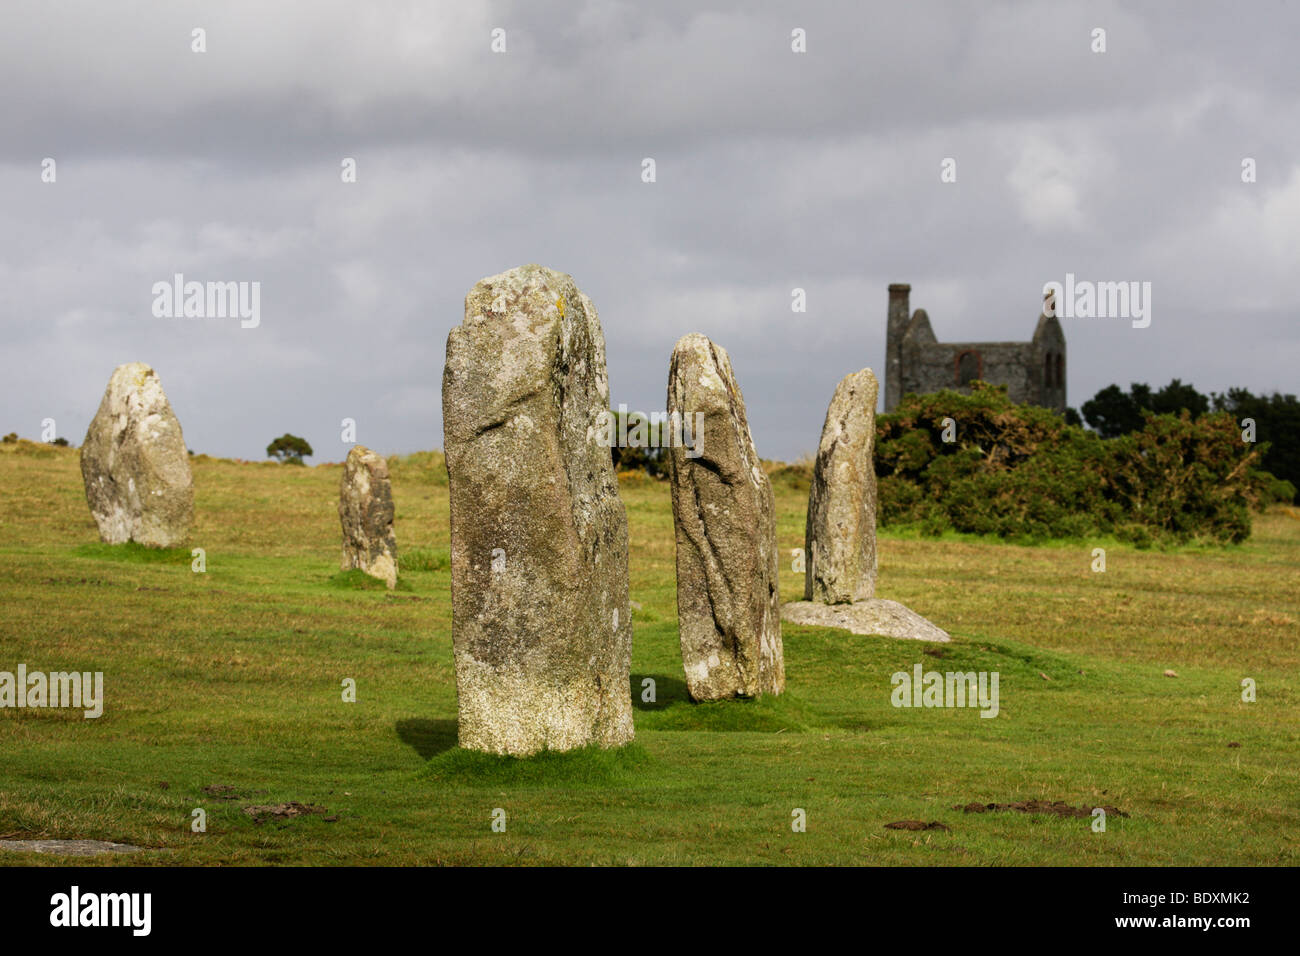 El Hurlers Stone Circle, secuaces, Cornwall, Inglaterra Foto de stock